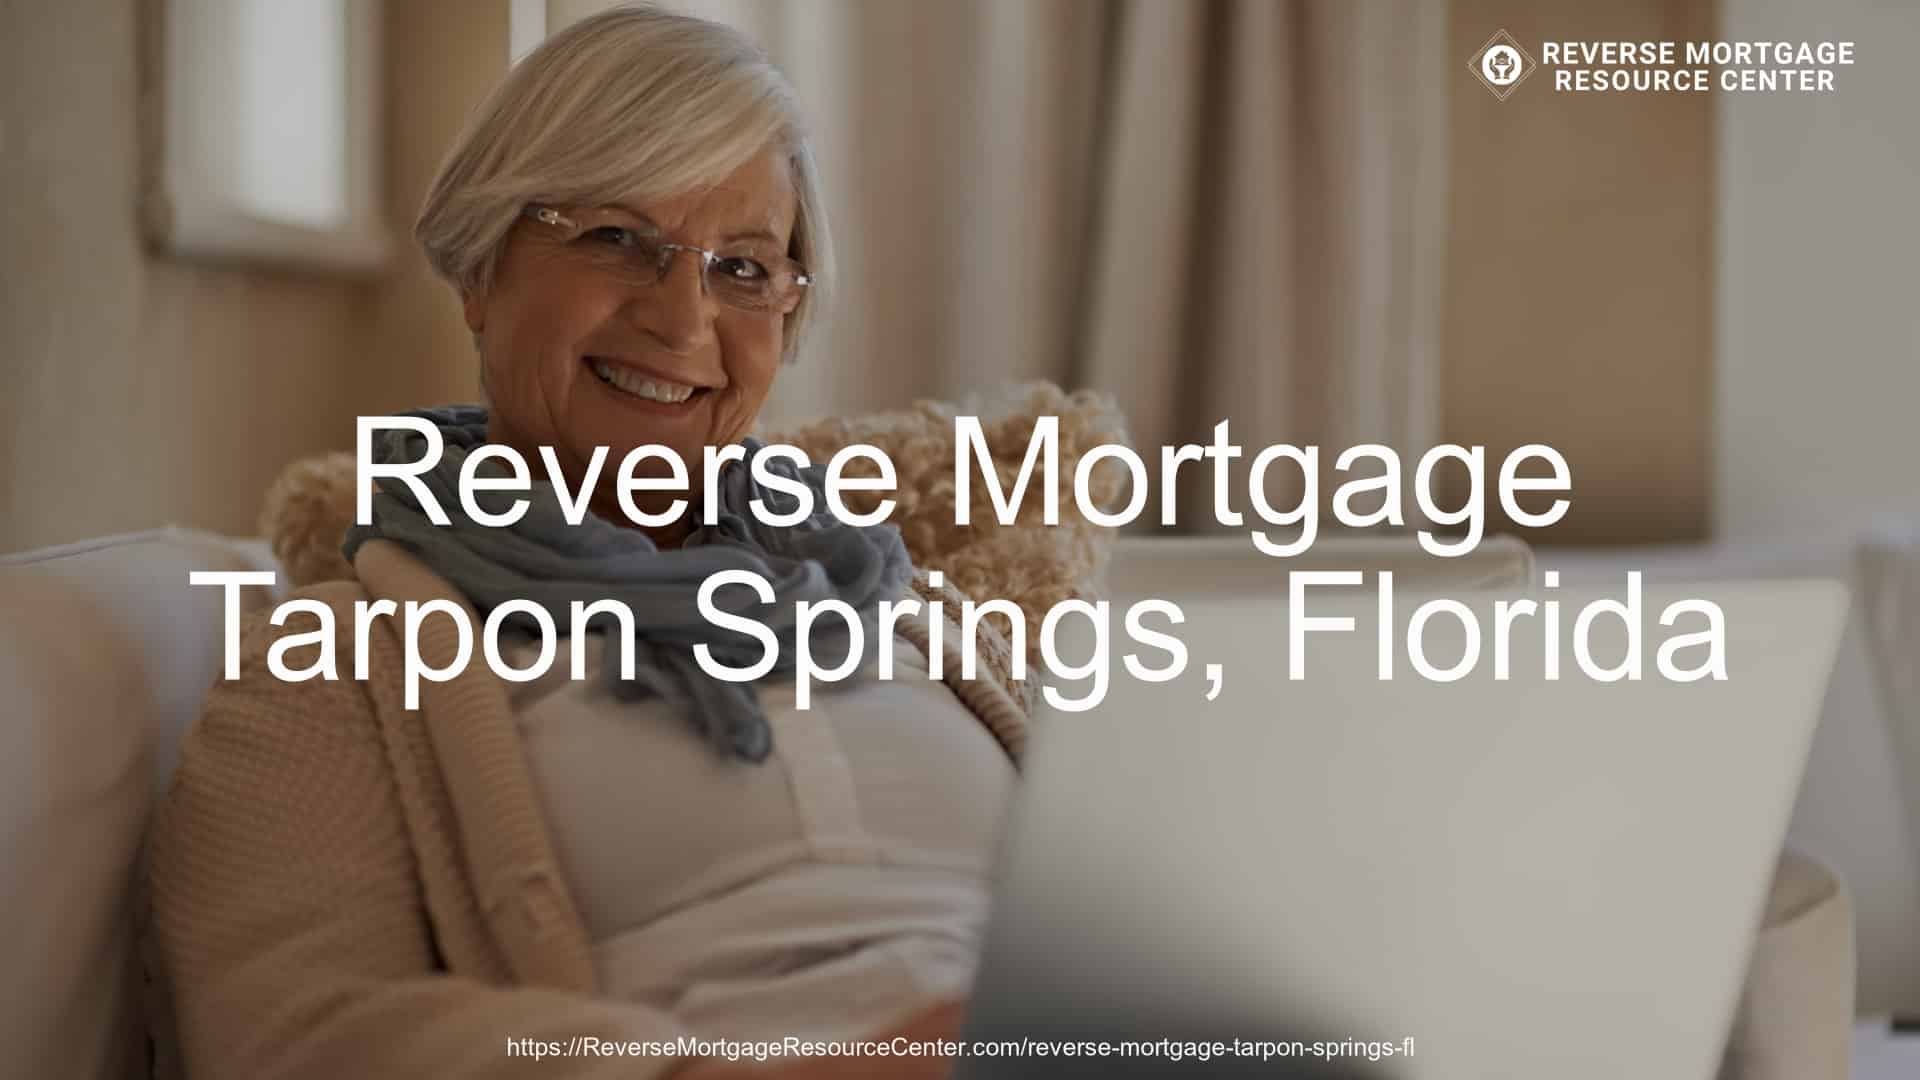 Reverse Mortgage Loans in Tarpon Springs Florida